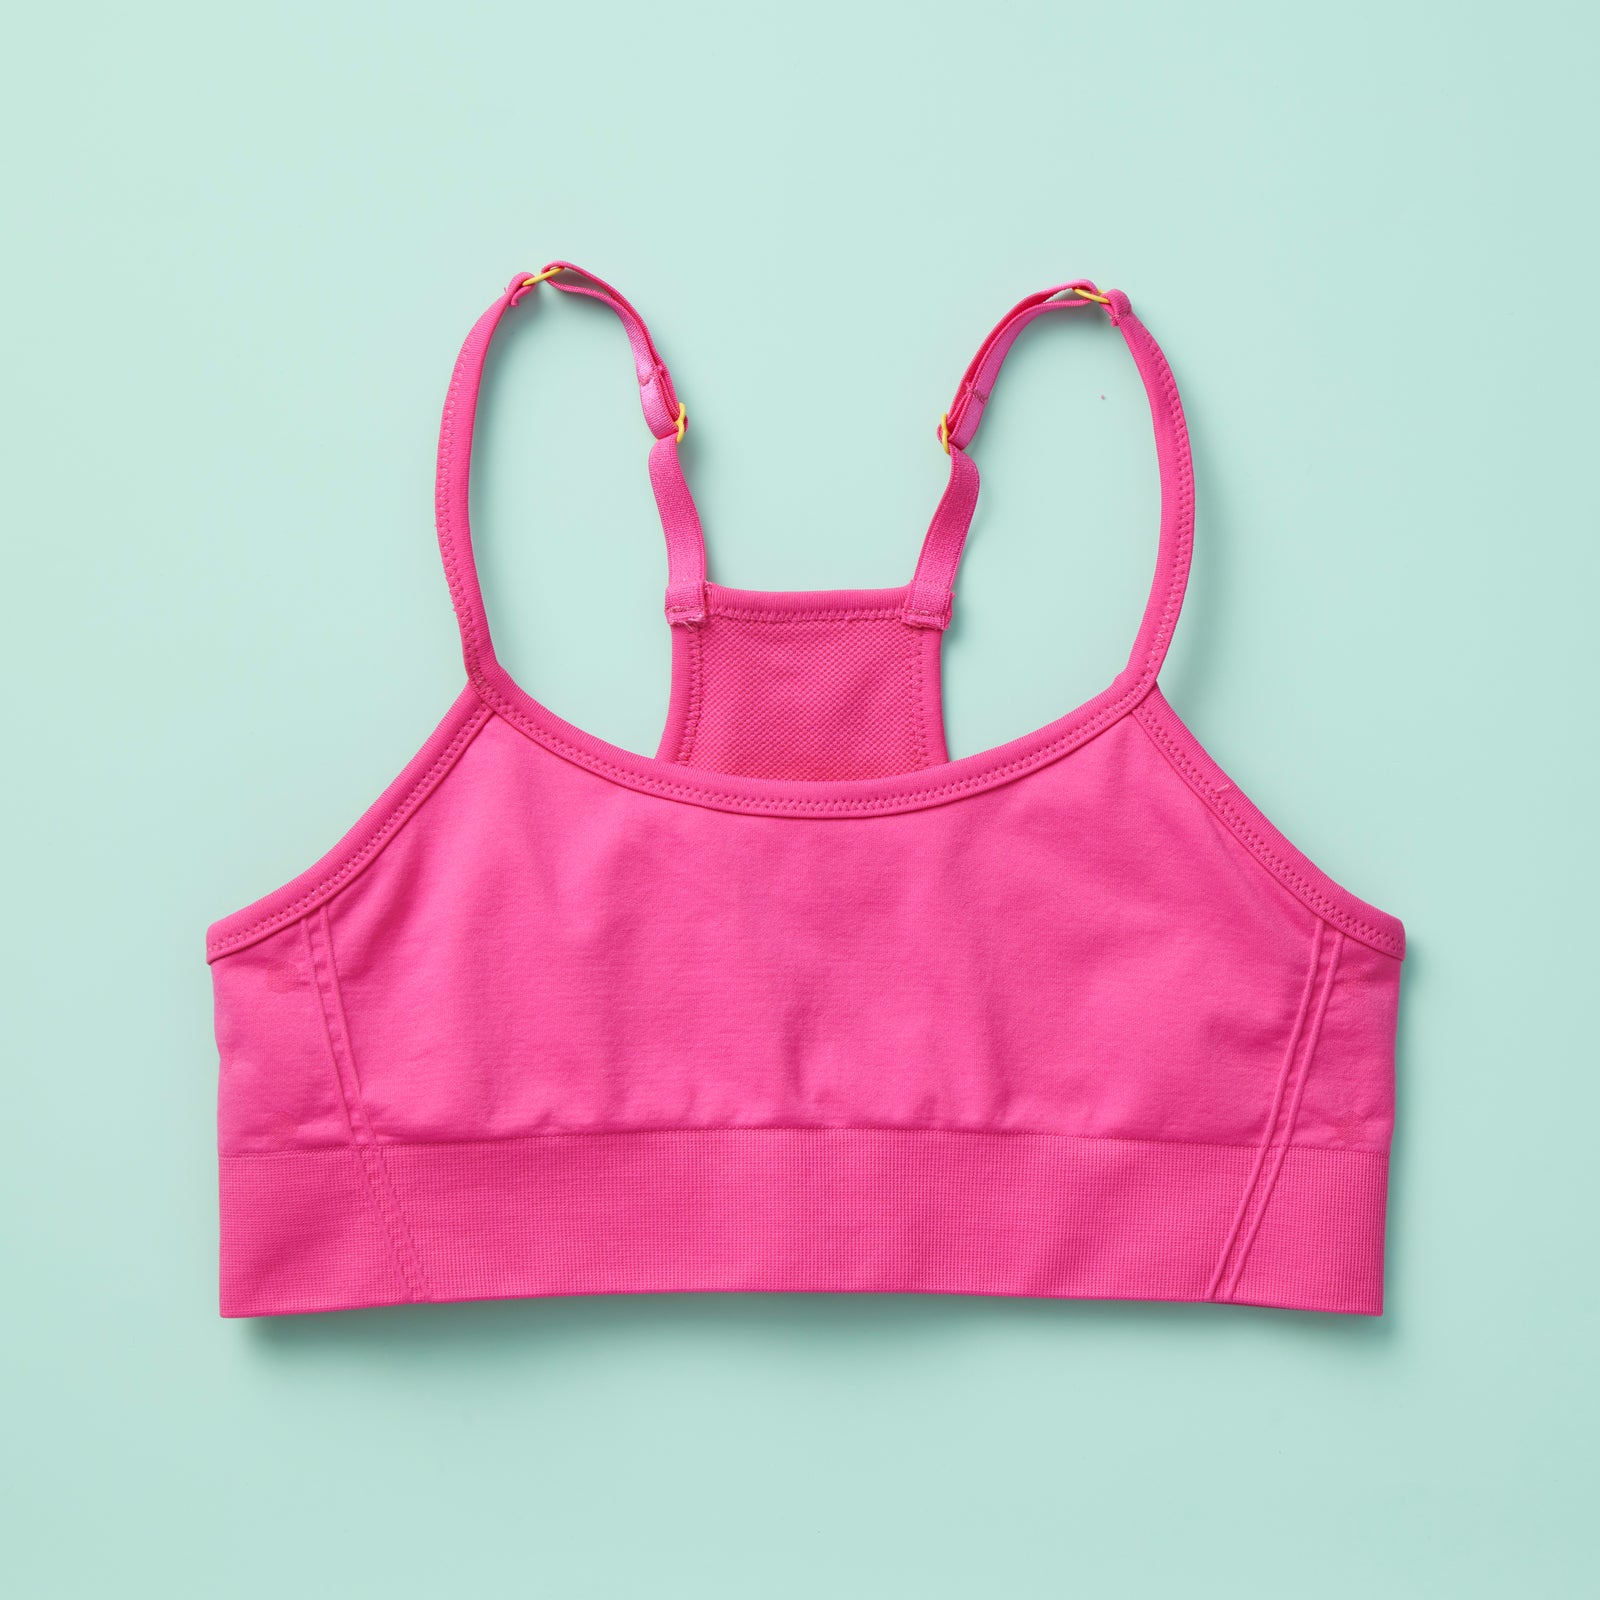 Tweens Pink Bras - Get Best Price from Manufacturers & Suppliers